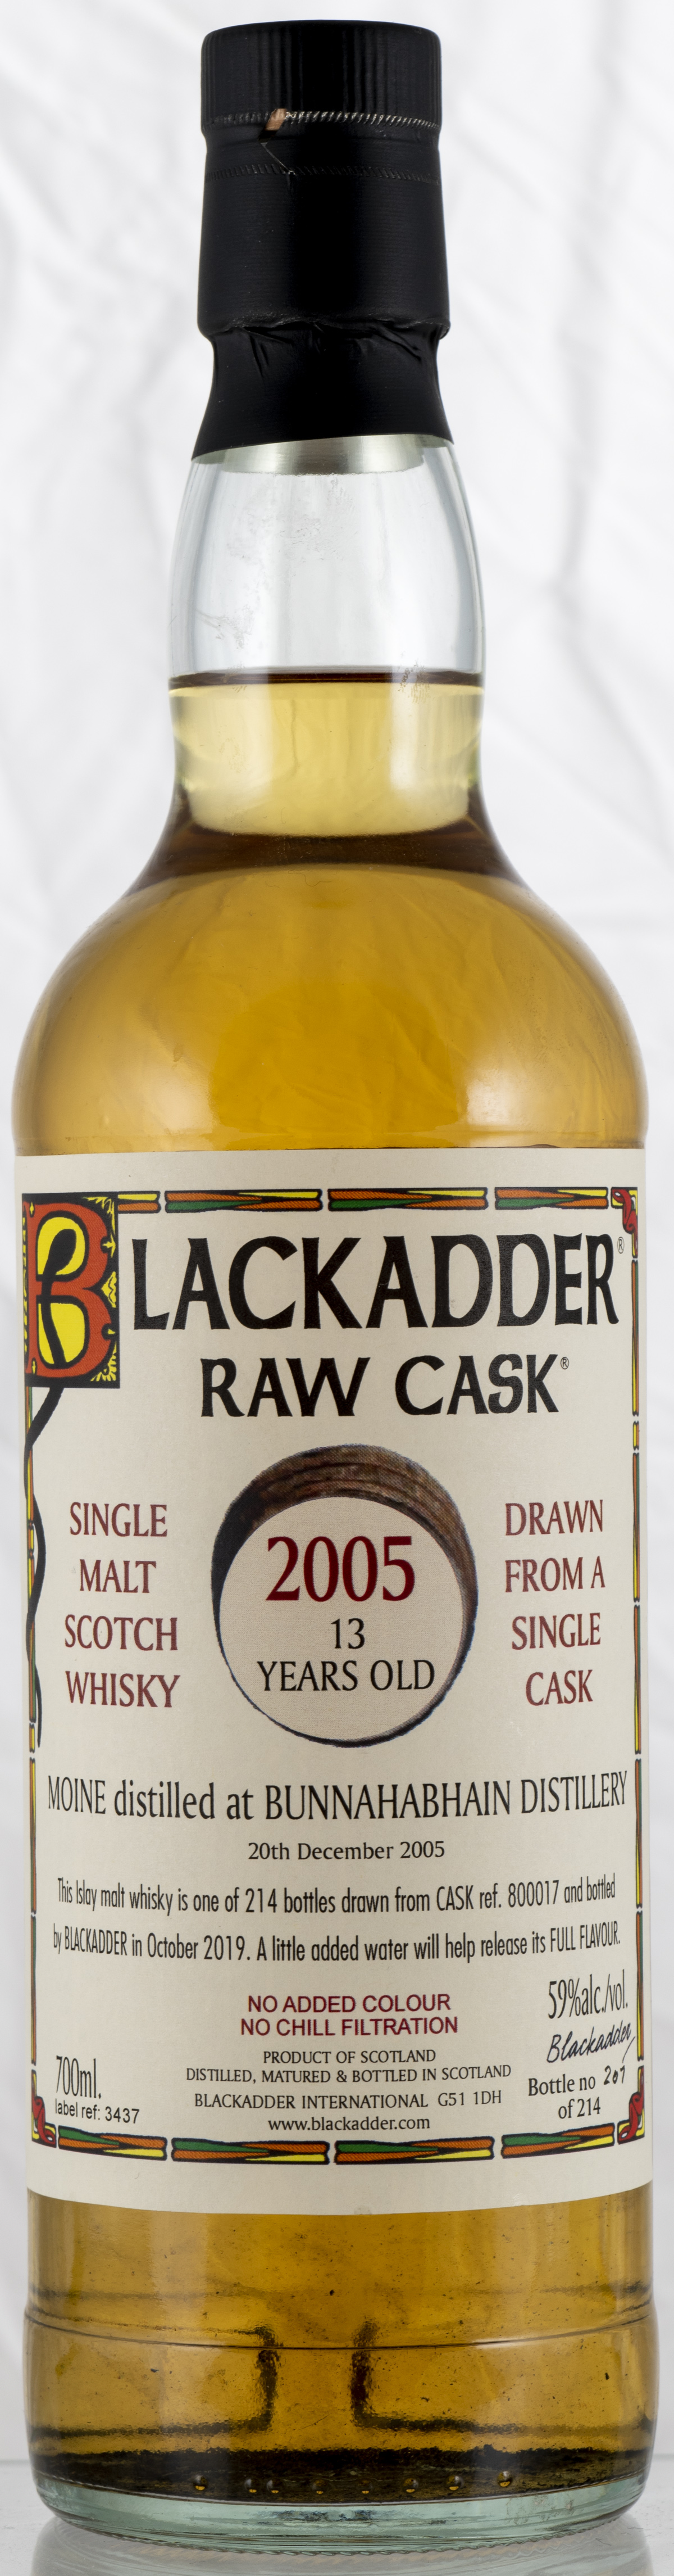 Billede: PHC_4010 - Blackadder Raw Cask Bunnahabhain 13 - bottle front.jpg